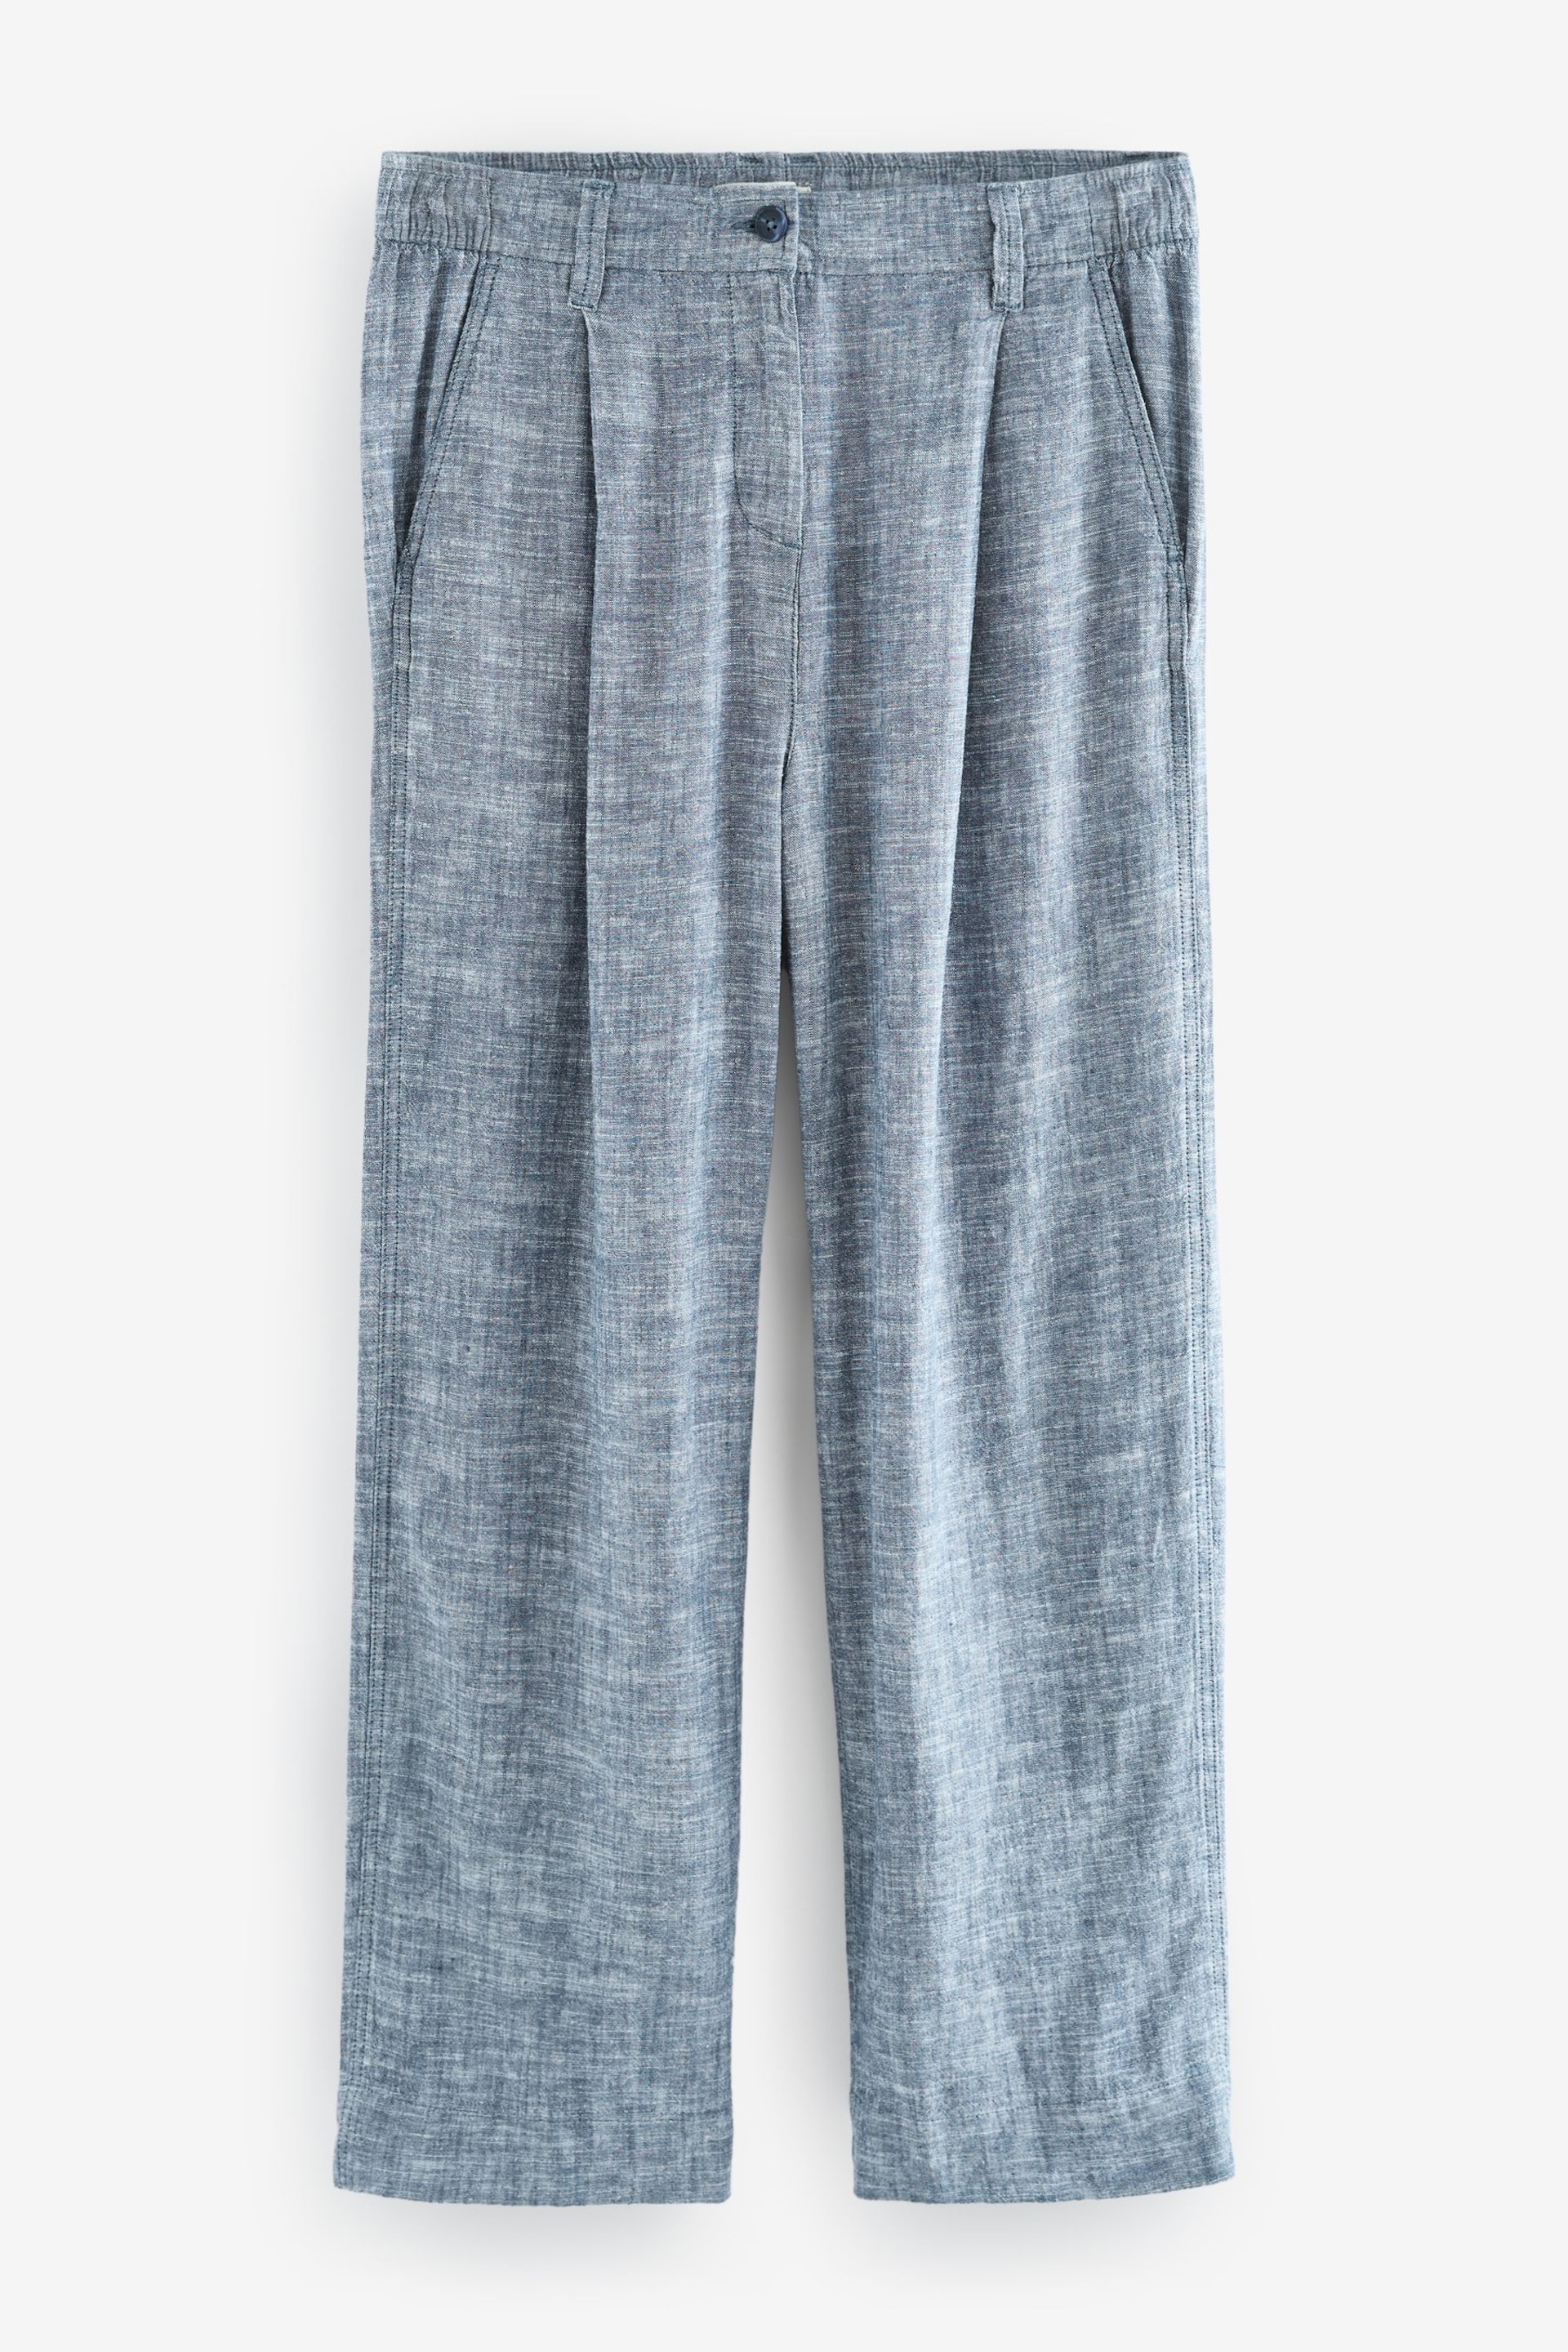 Blue Linen Blend Wide Leg Trousers - Image 6 of 7